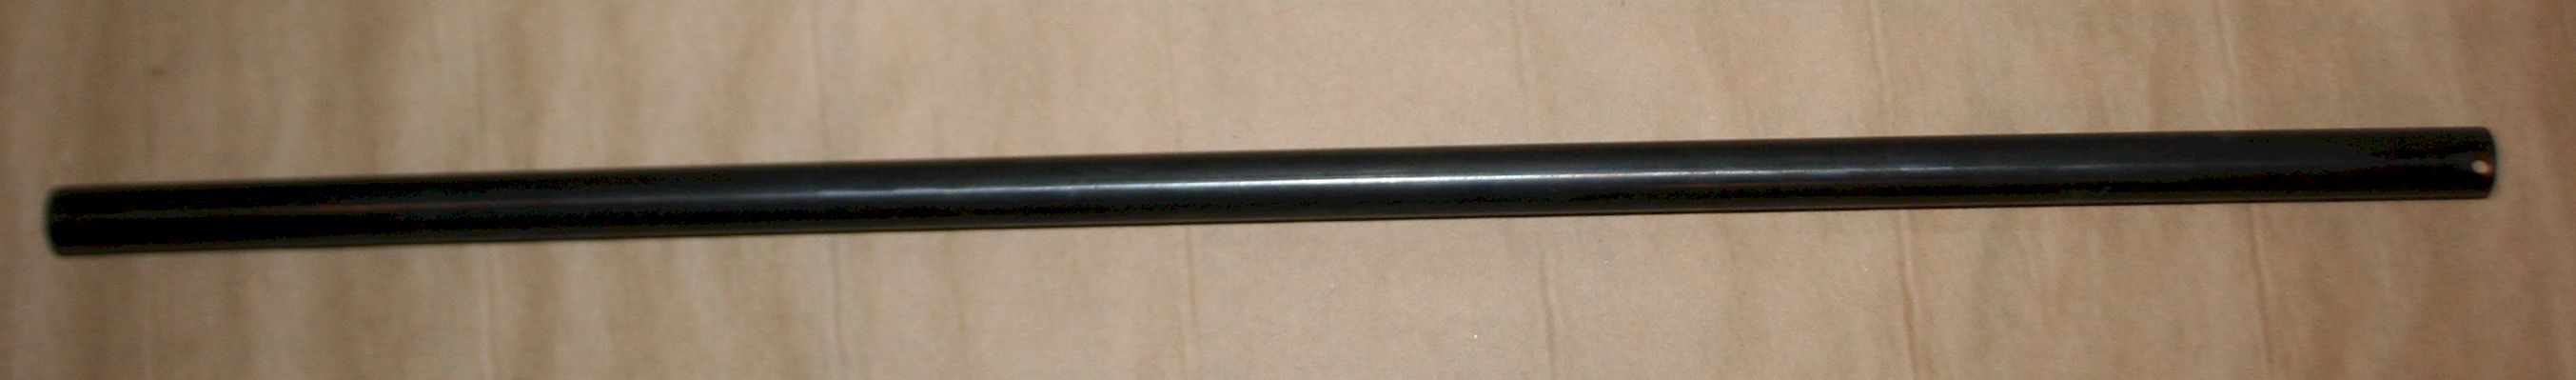 Magazine tube EXTRA LONG 30 inch Winchester 1886